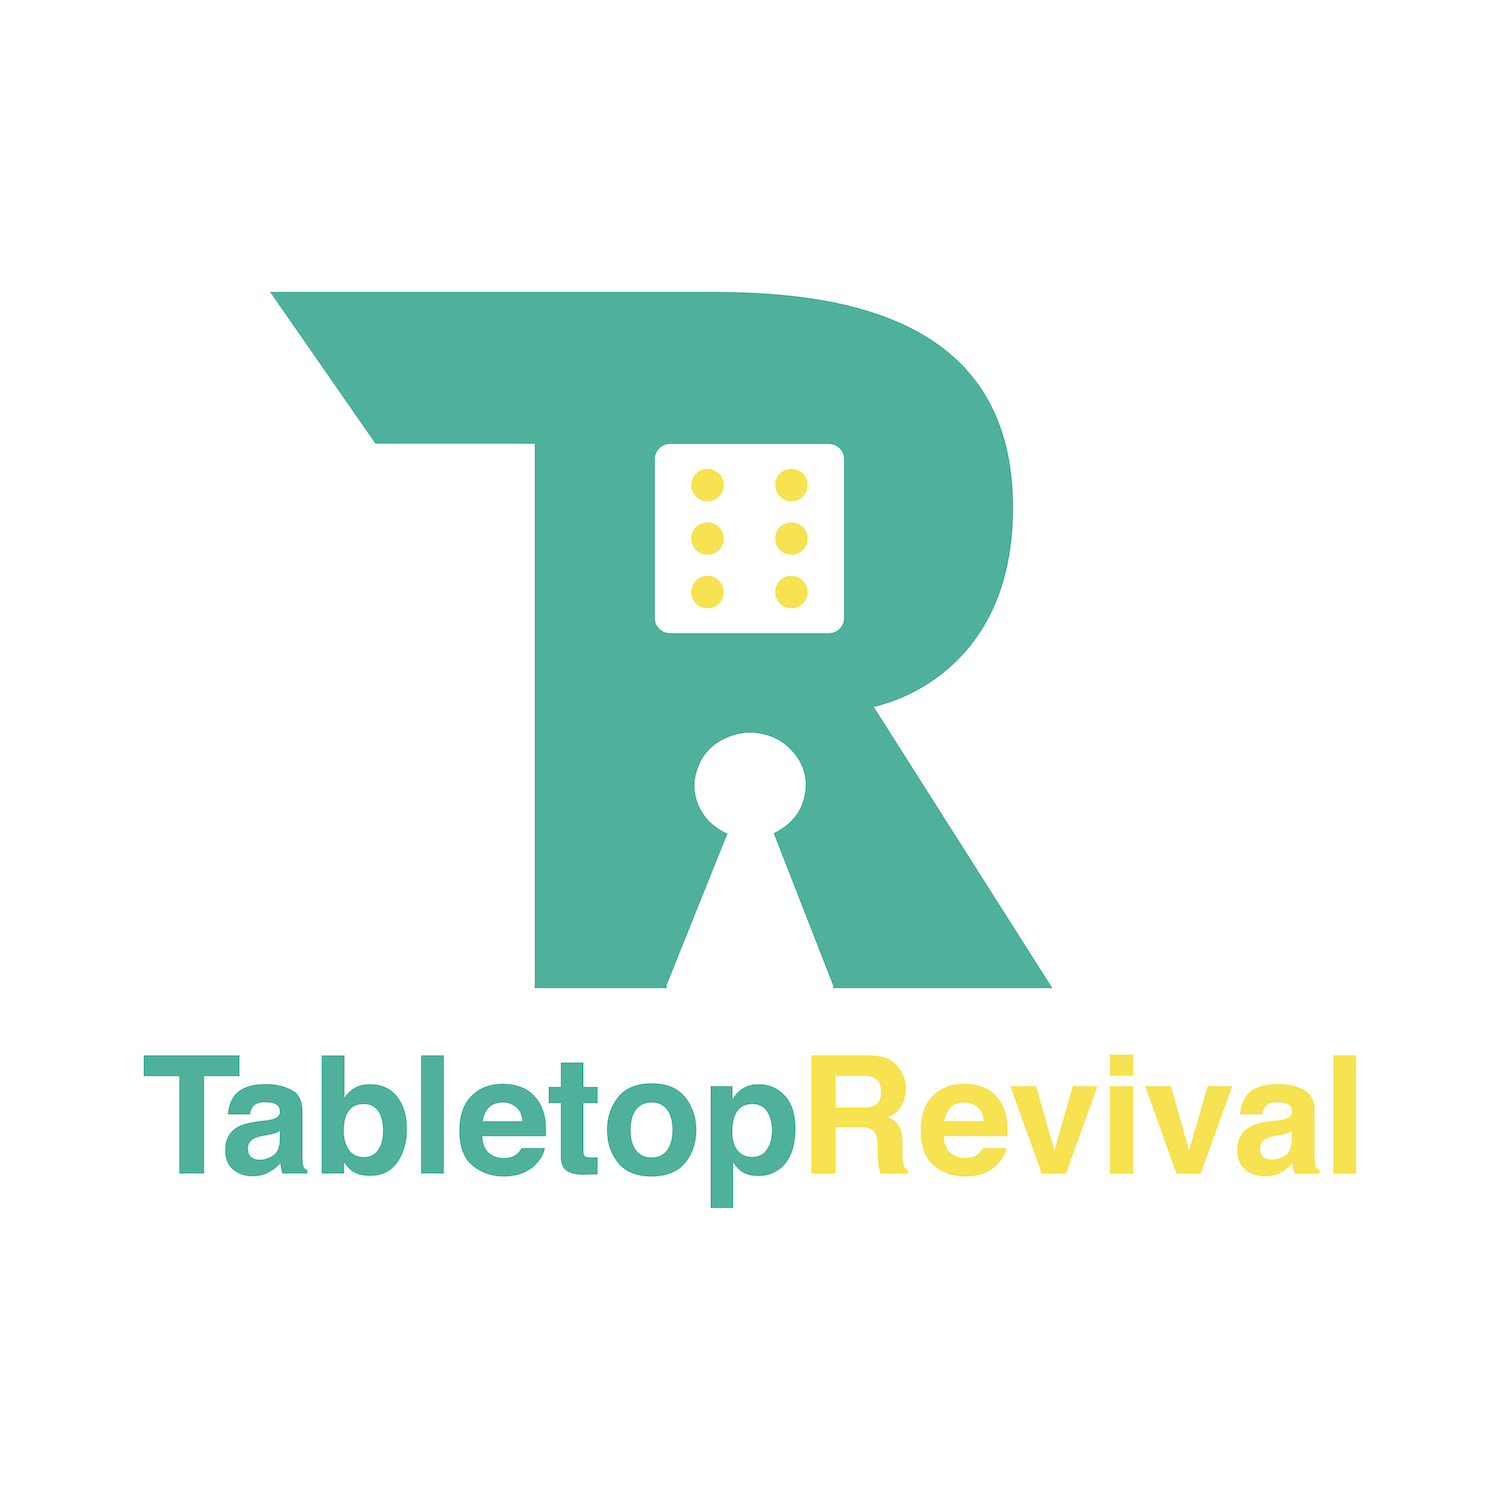 tabletopRevival_logo-02.png